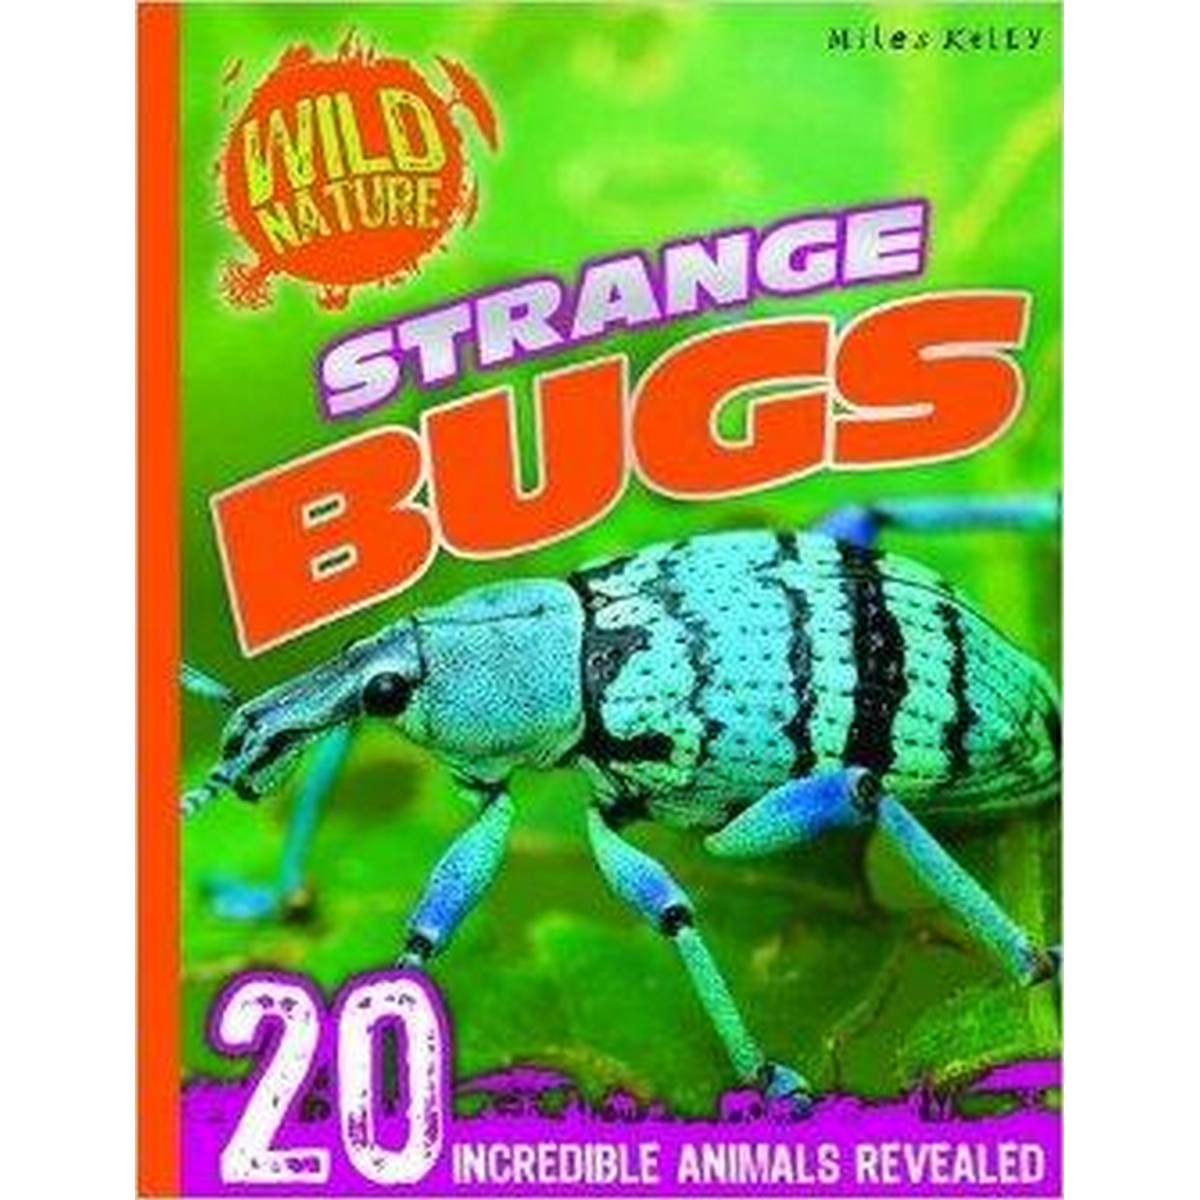 Strange Bugs (Wild Nature)